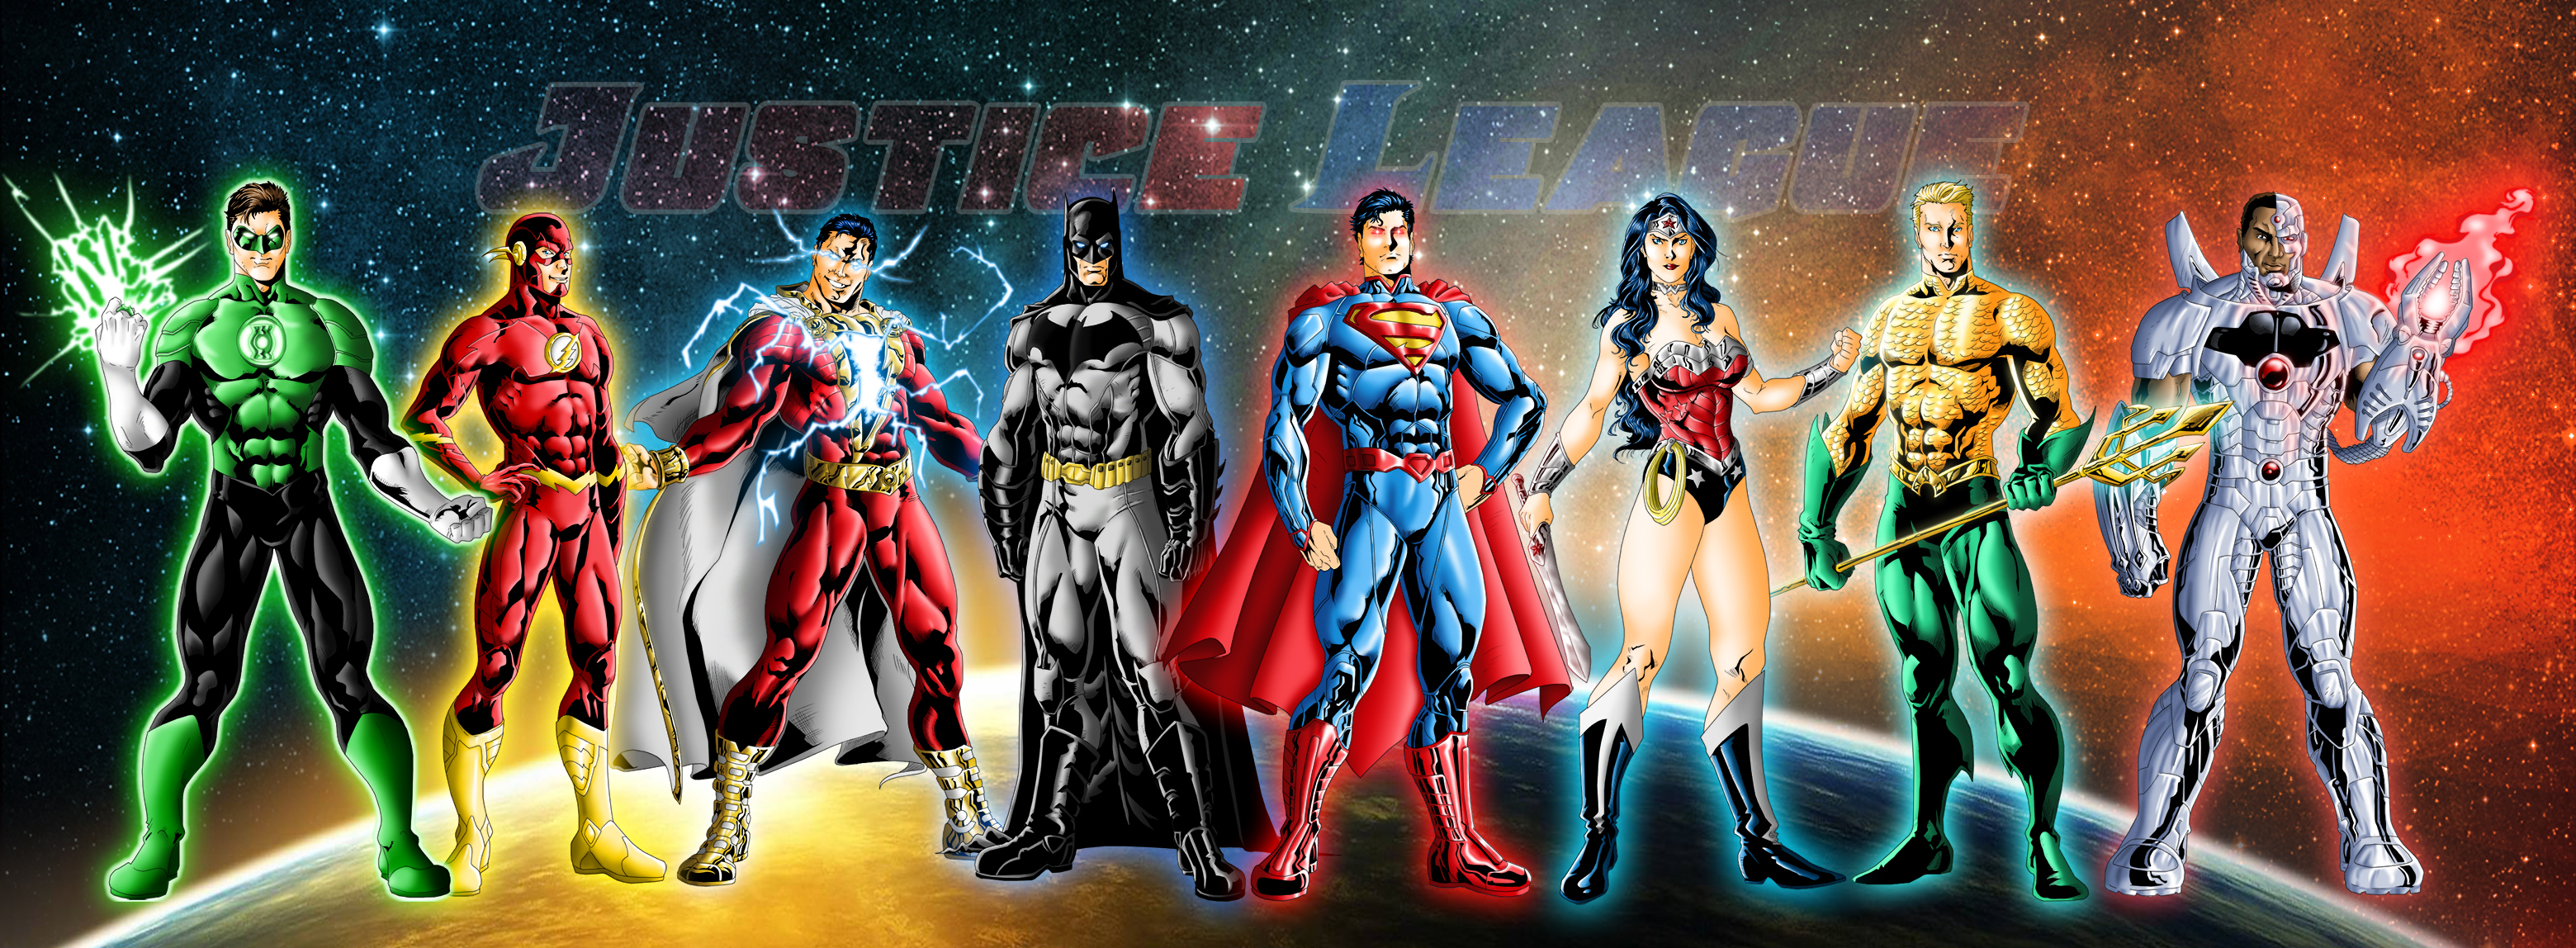 Free HD comics, superman, shazam (dc comics), hal jordan, diana prince, batman, justice league, billy batson, aquaman, wonder woman, cyborg (dc comics), superhero, barry allen, flash, green lantern, dc comics